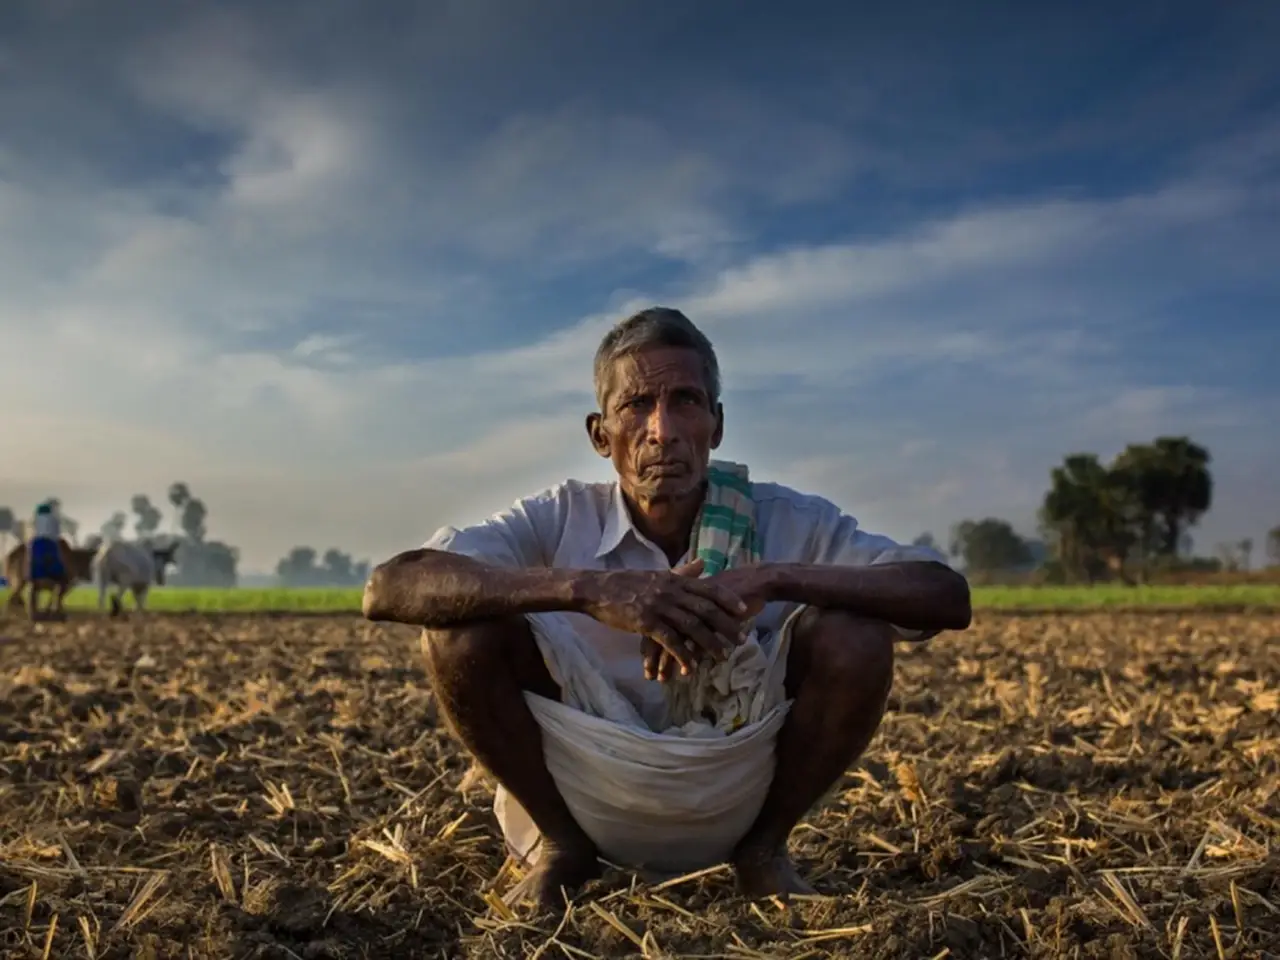 Farmer in an open field in rural India (File Image)